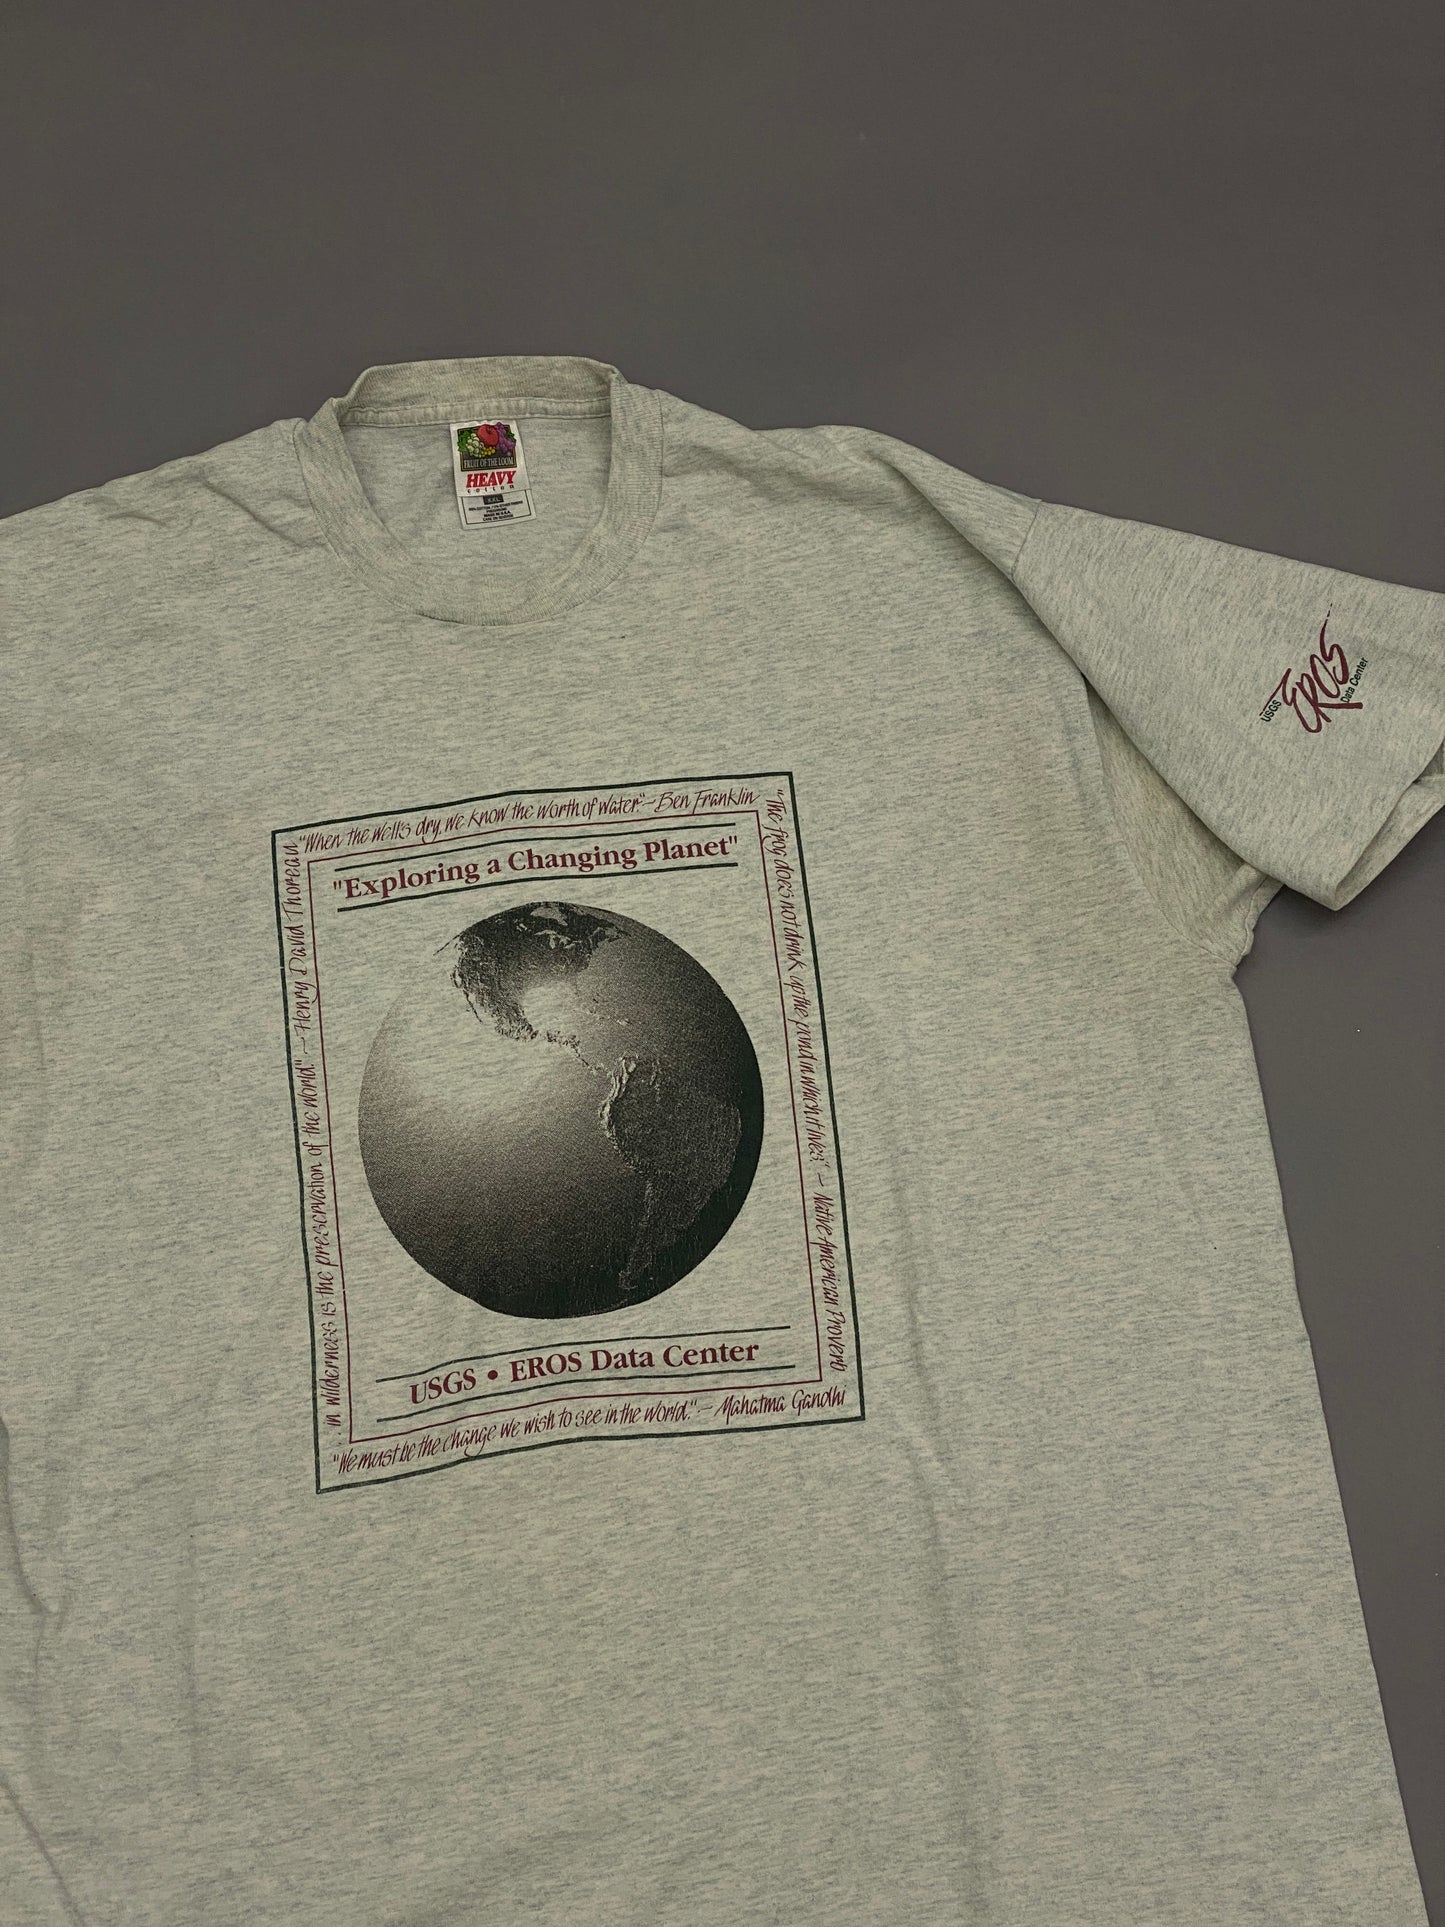 Vintage Planet T-shirt